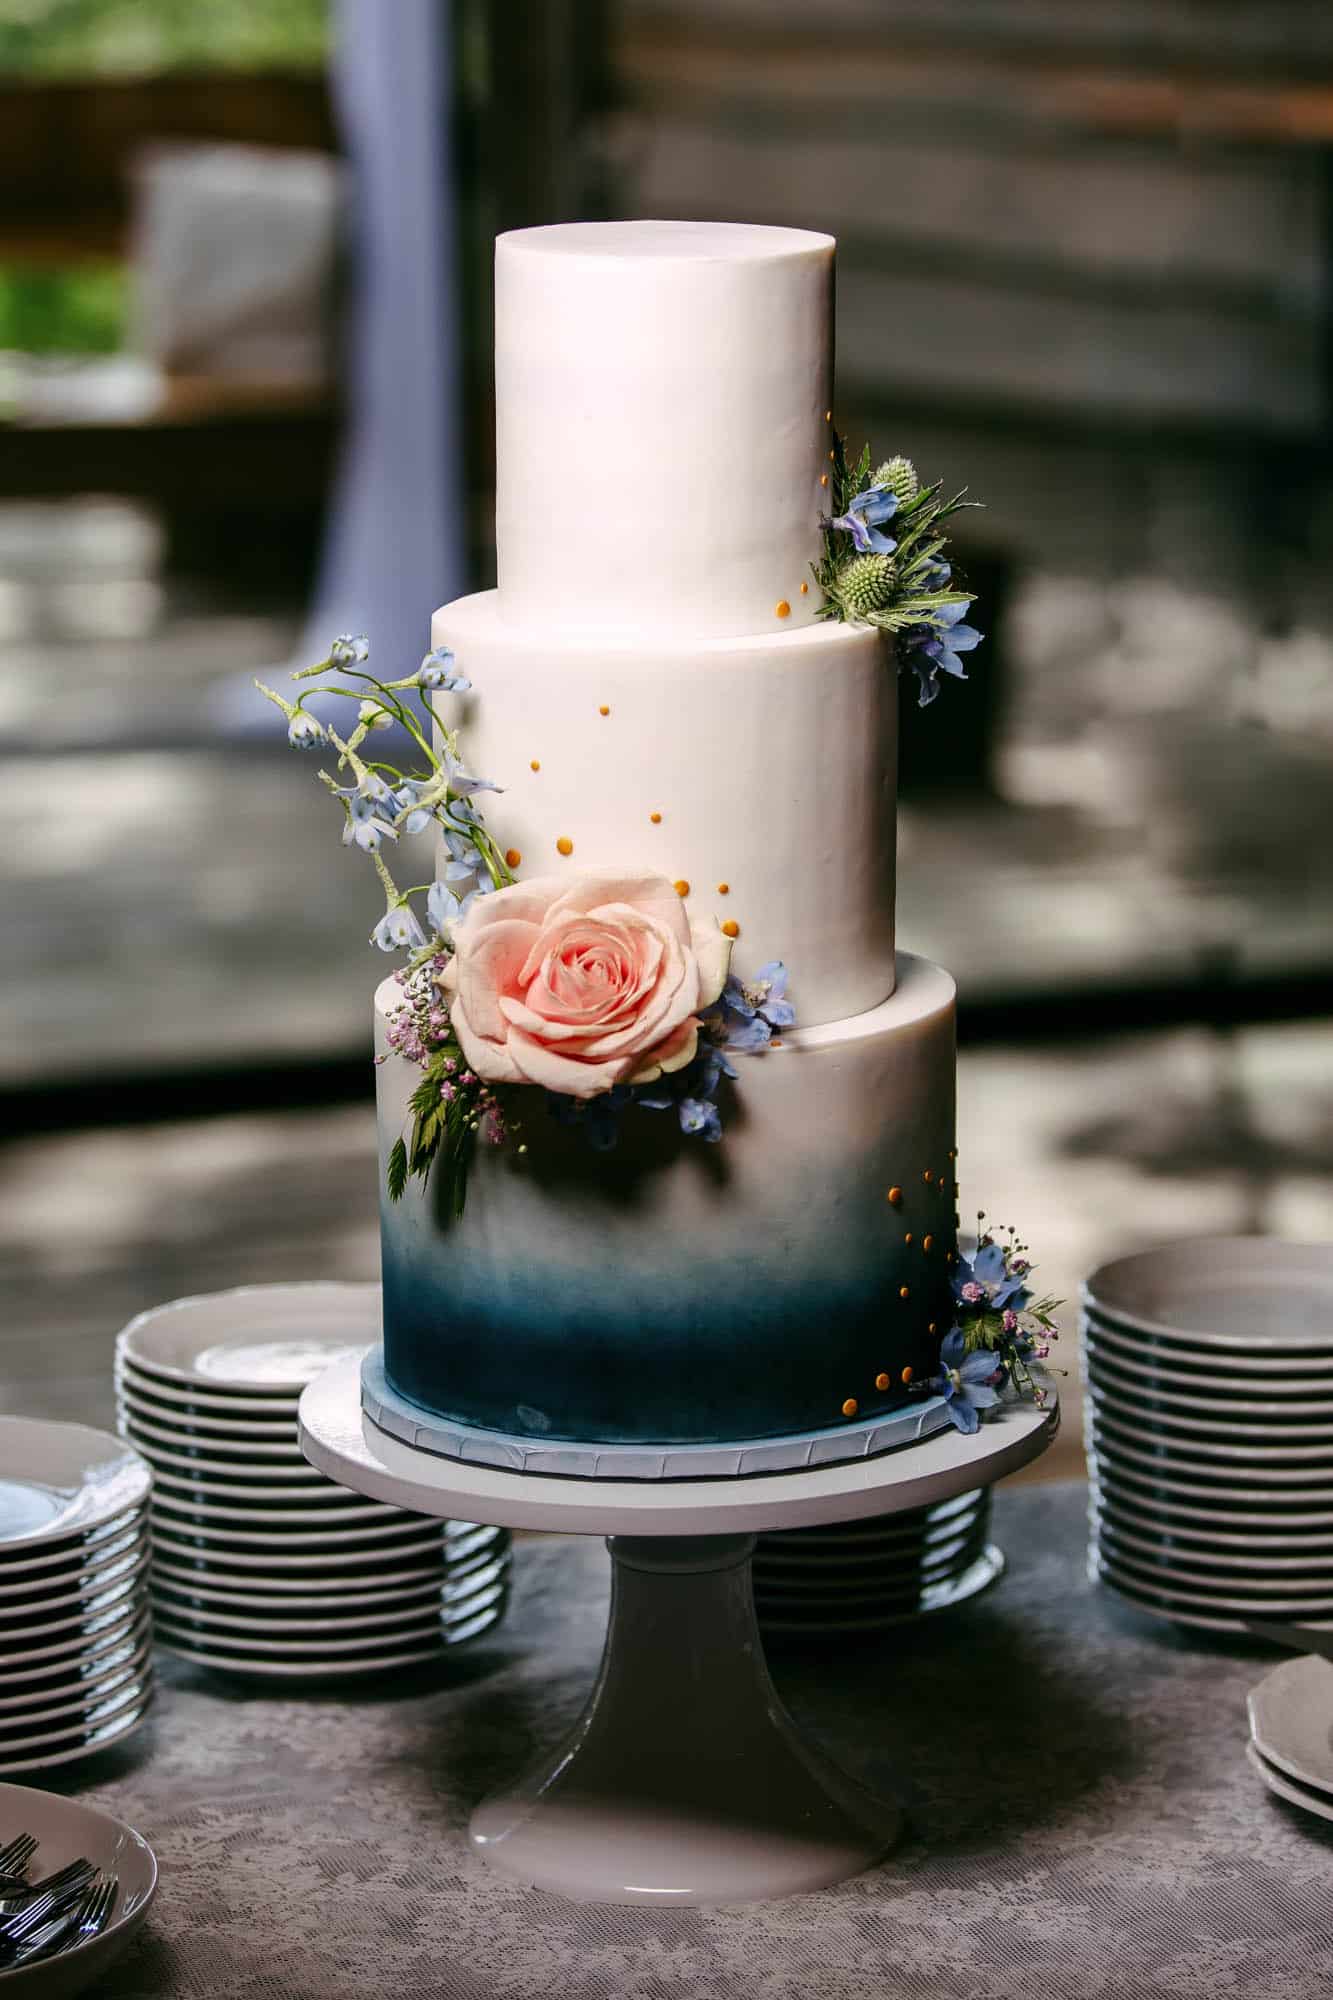 A wedding cake wedding cake on the table.